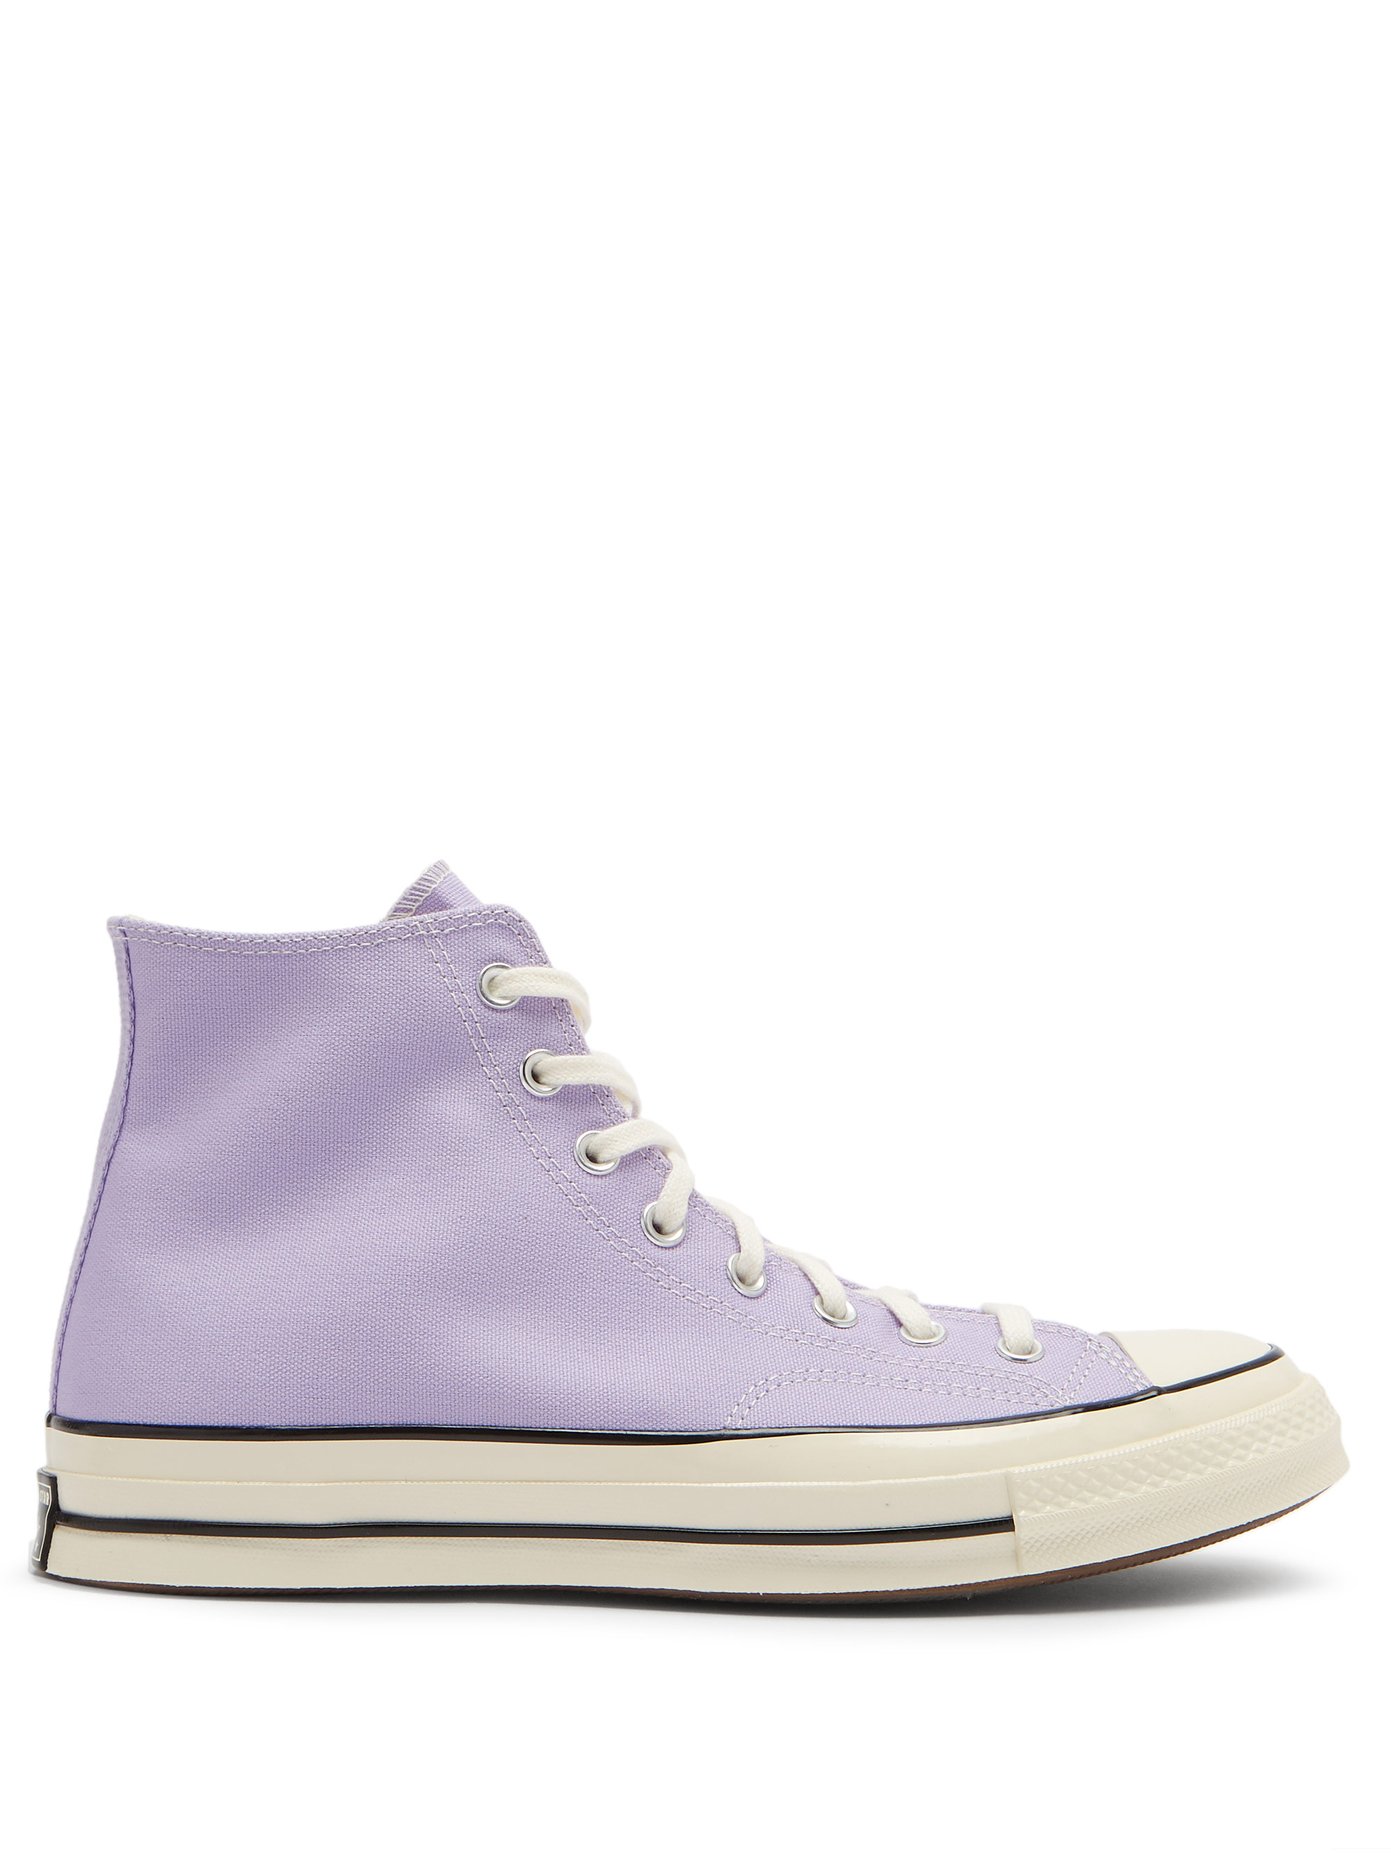 lilac converse high tops